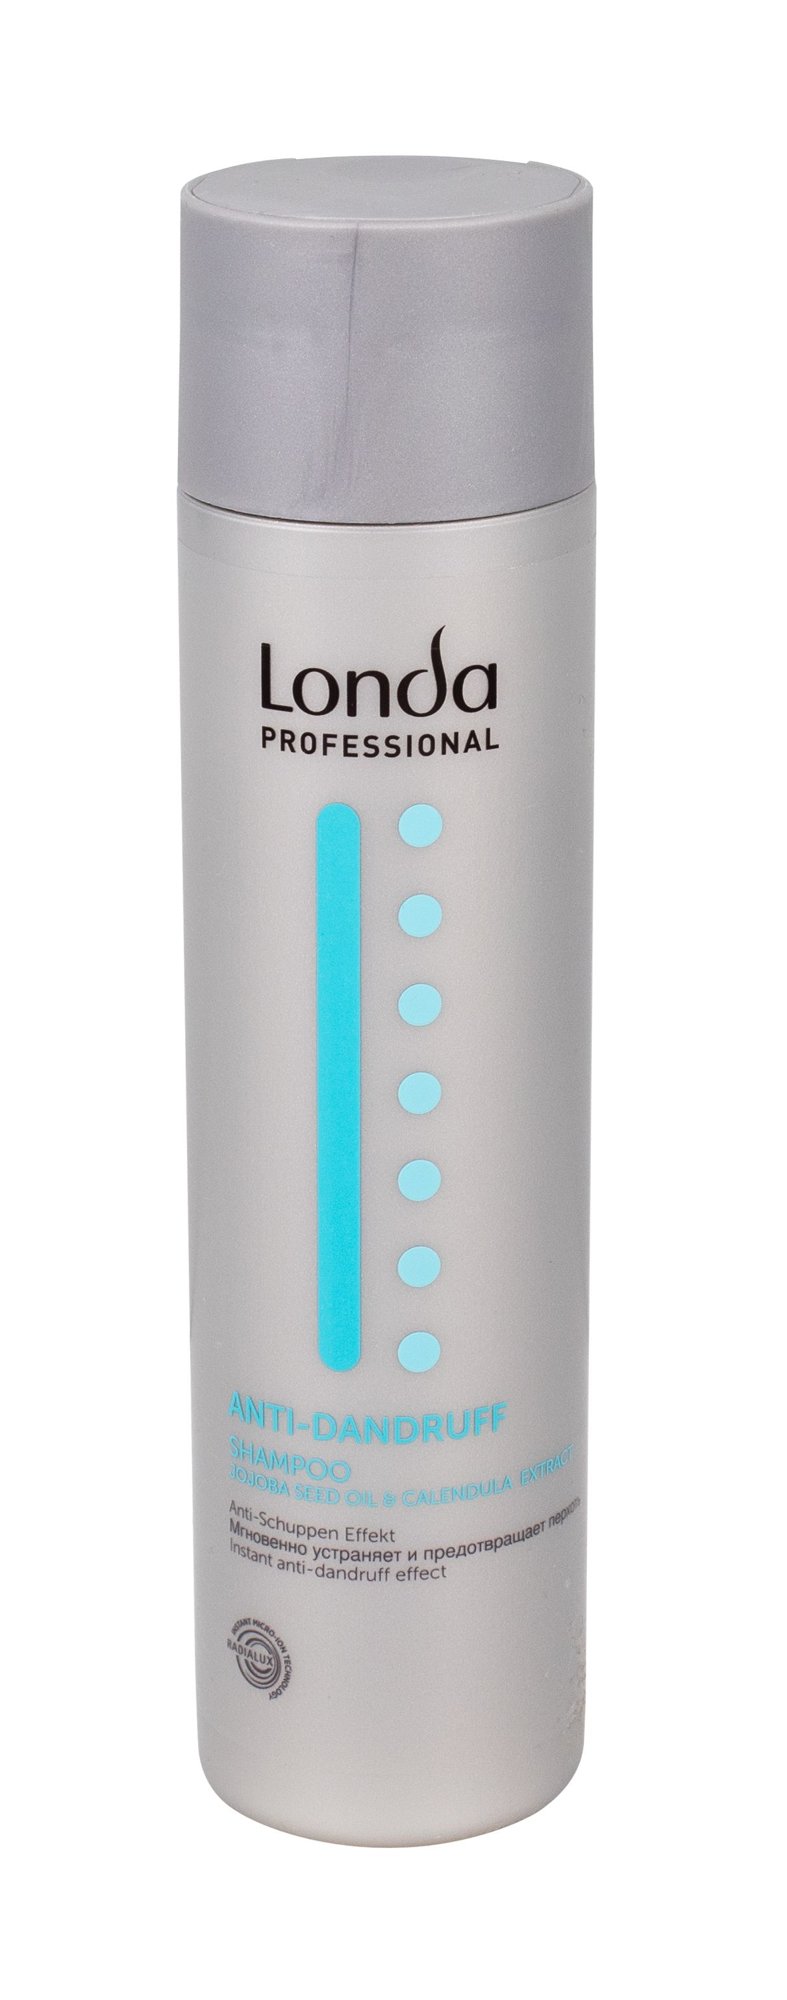 Londa Professional Anti-Dandruff Shampoo